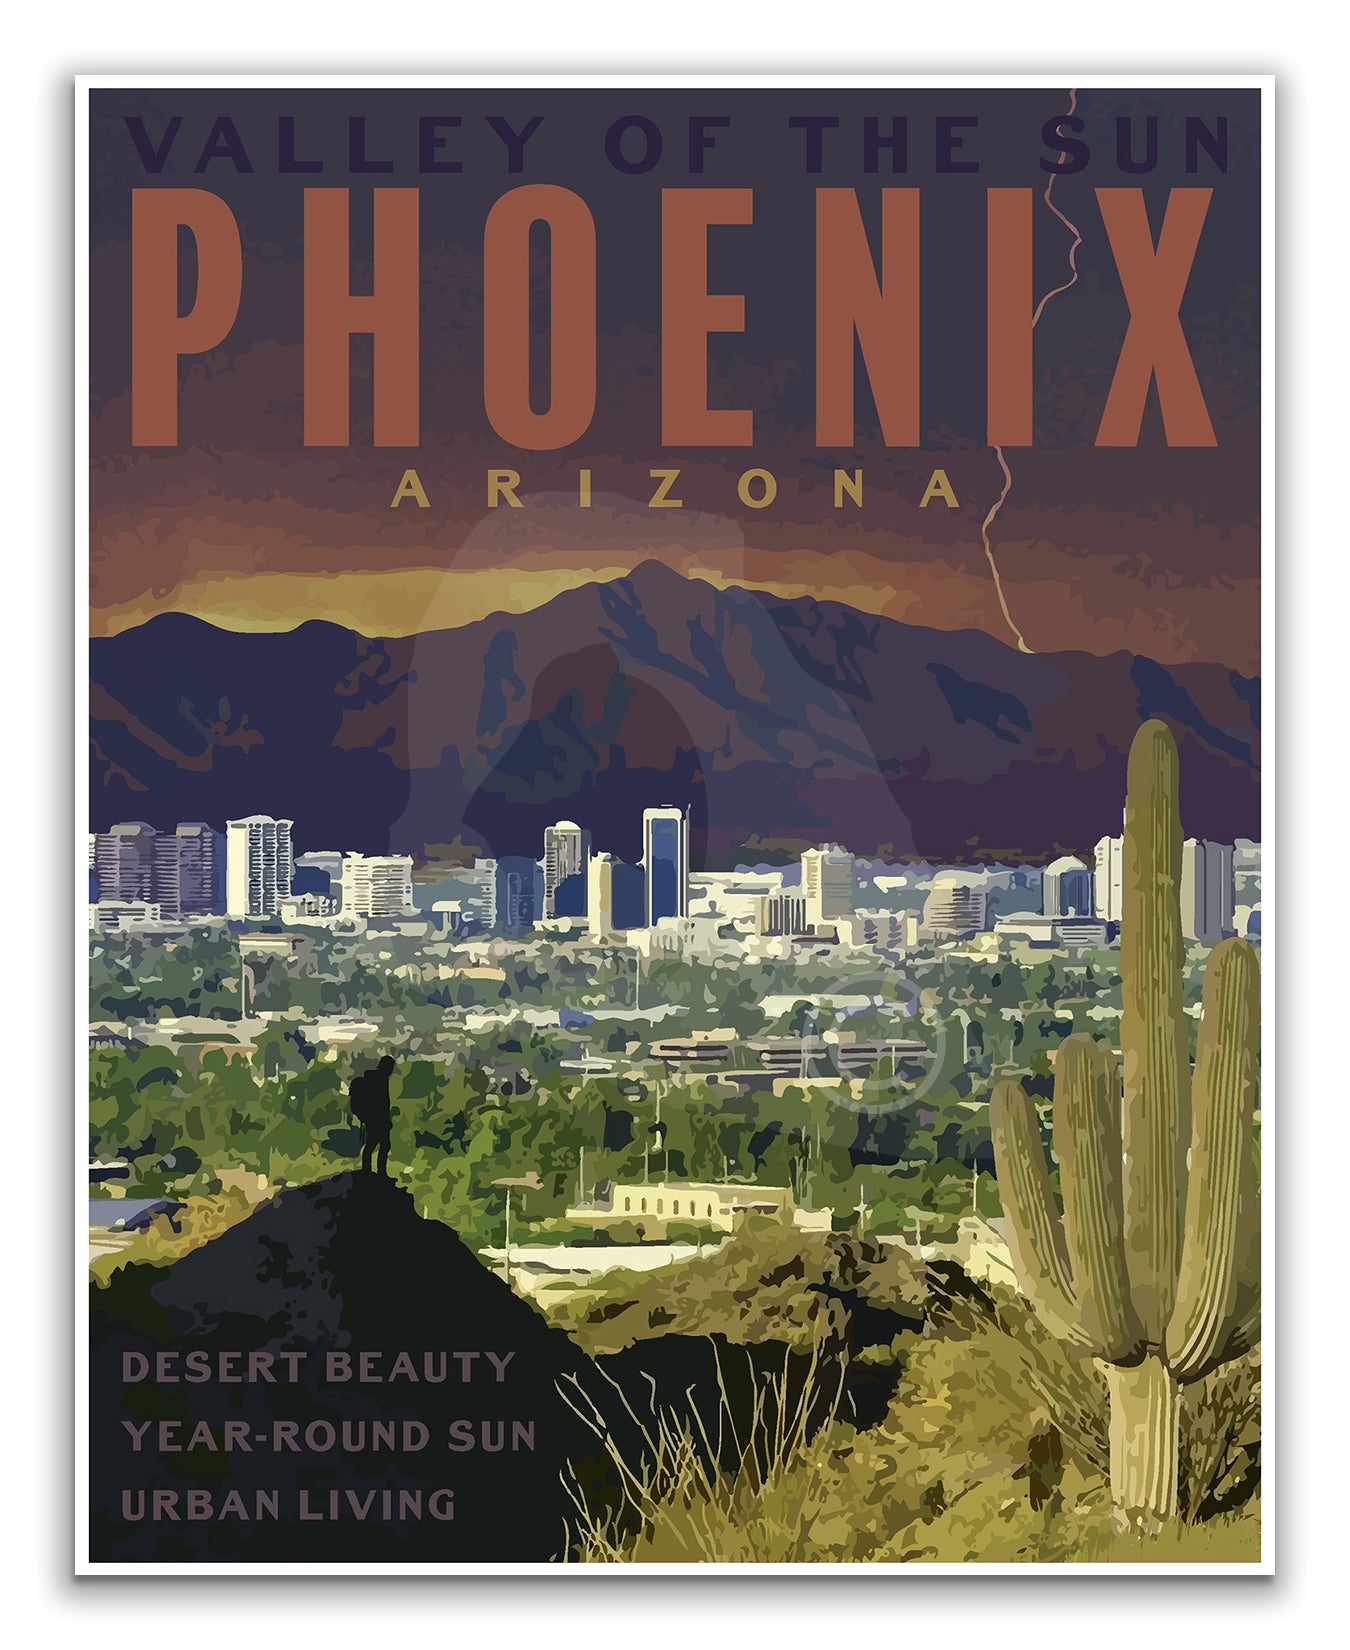 Phoenix Poster - Vintage Travel Poster